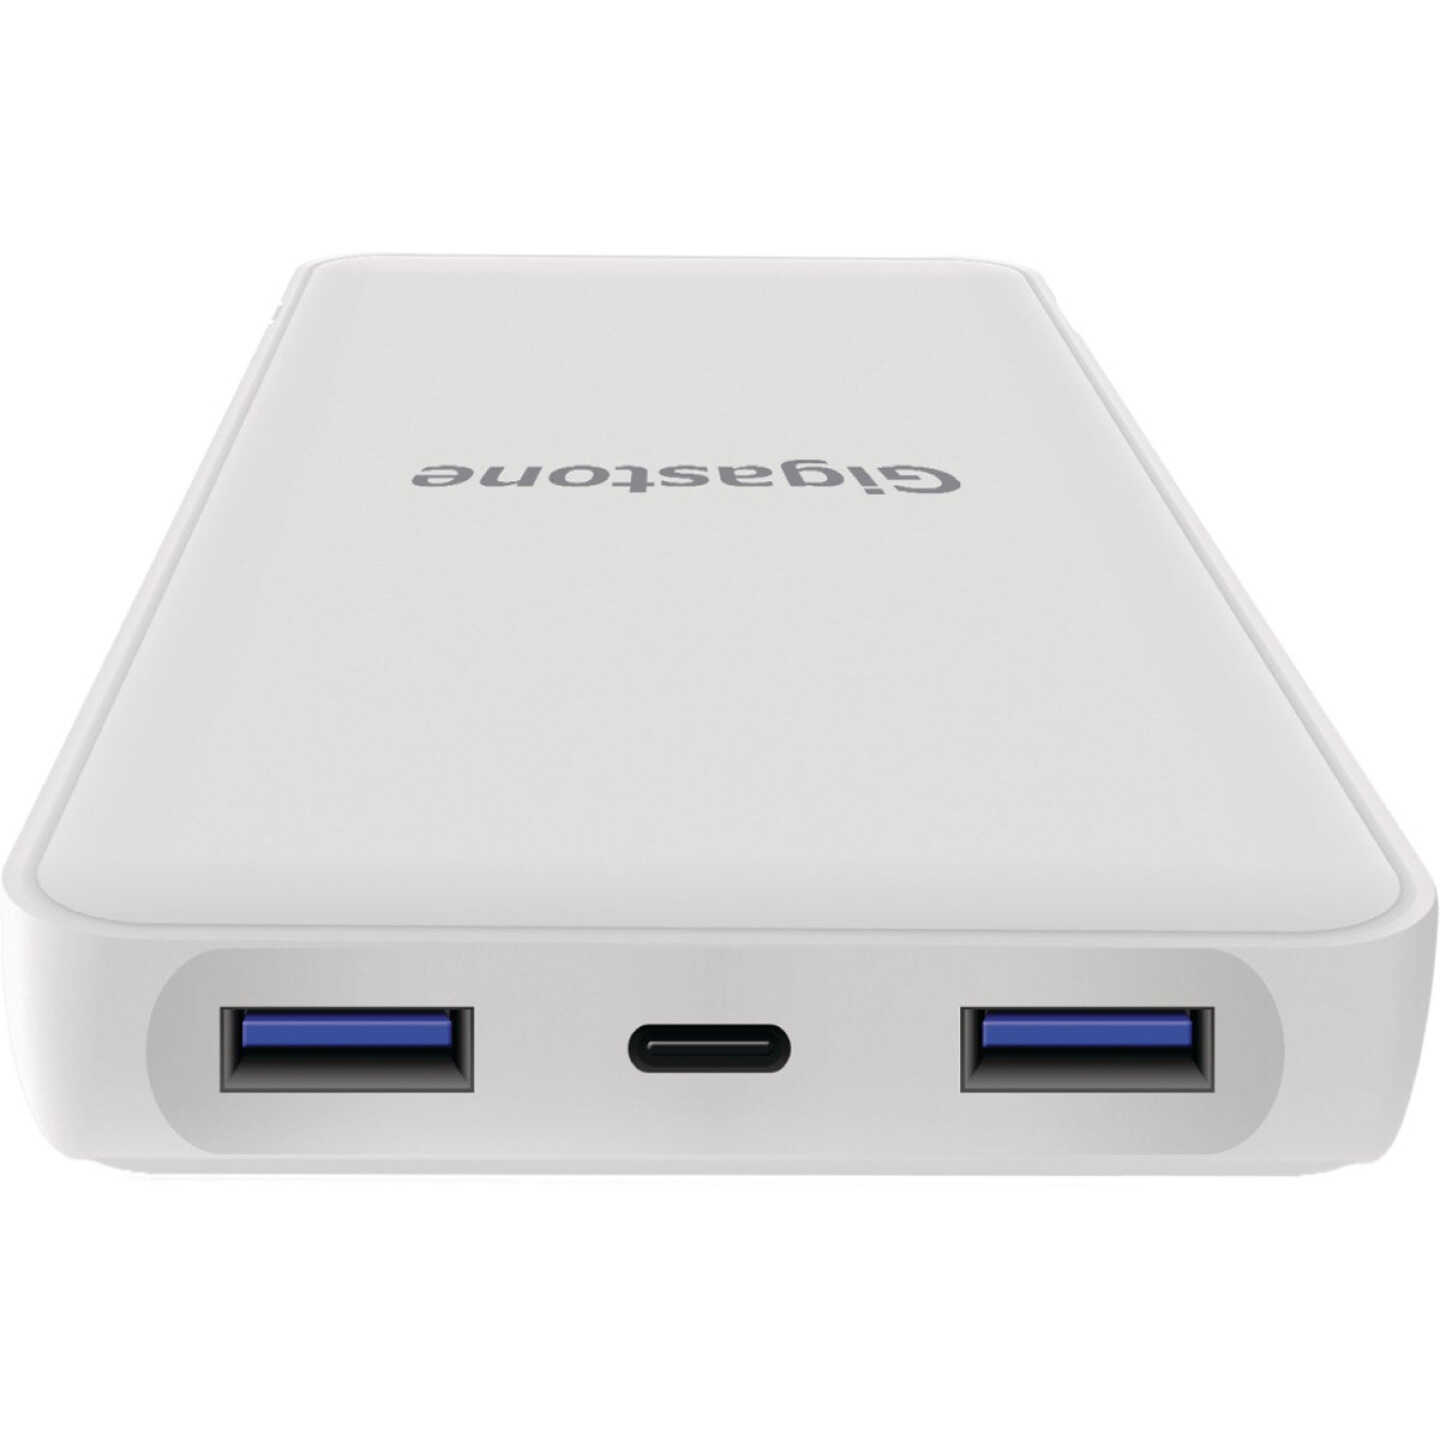 Gigastone 24,000 mAh Dual Port USB White Power Bank Image 5